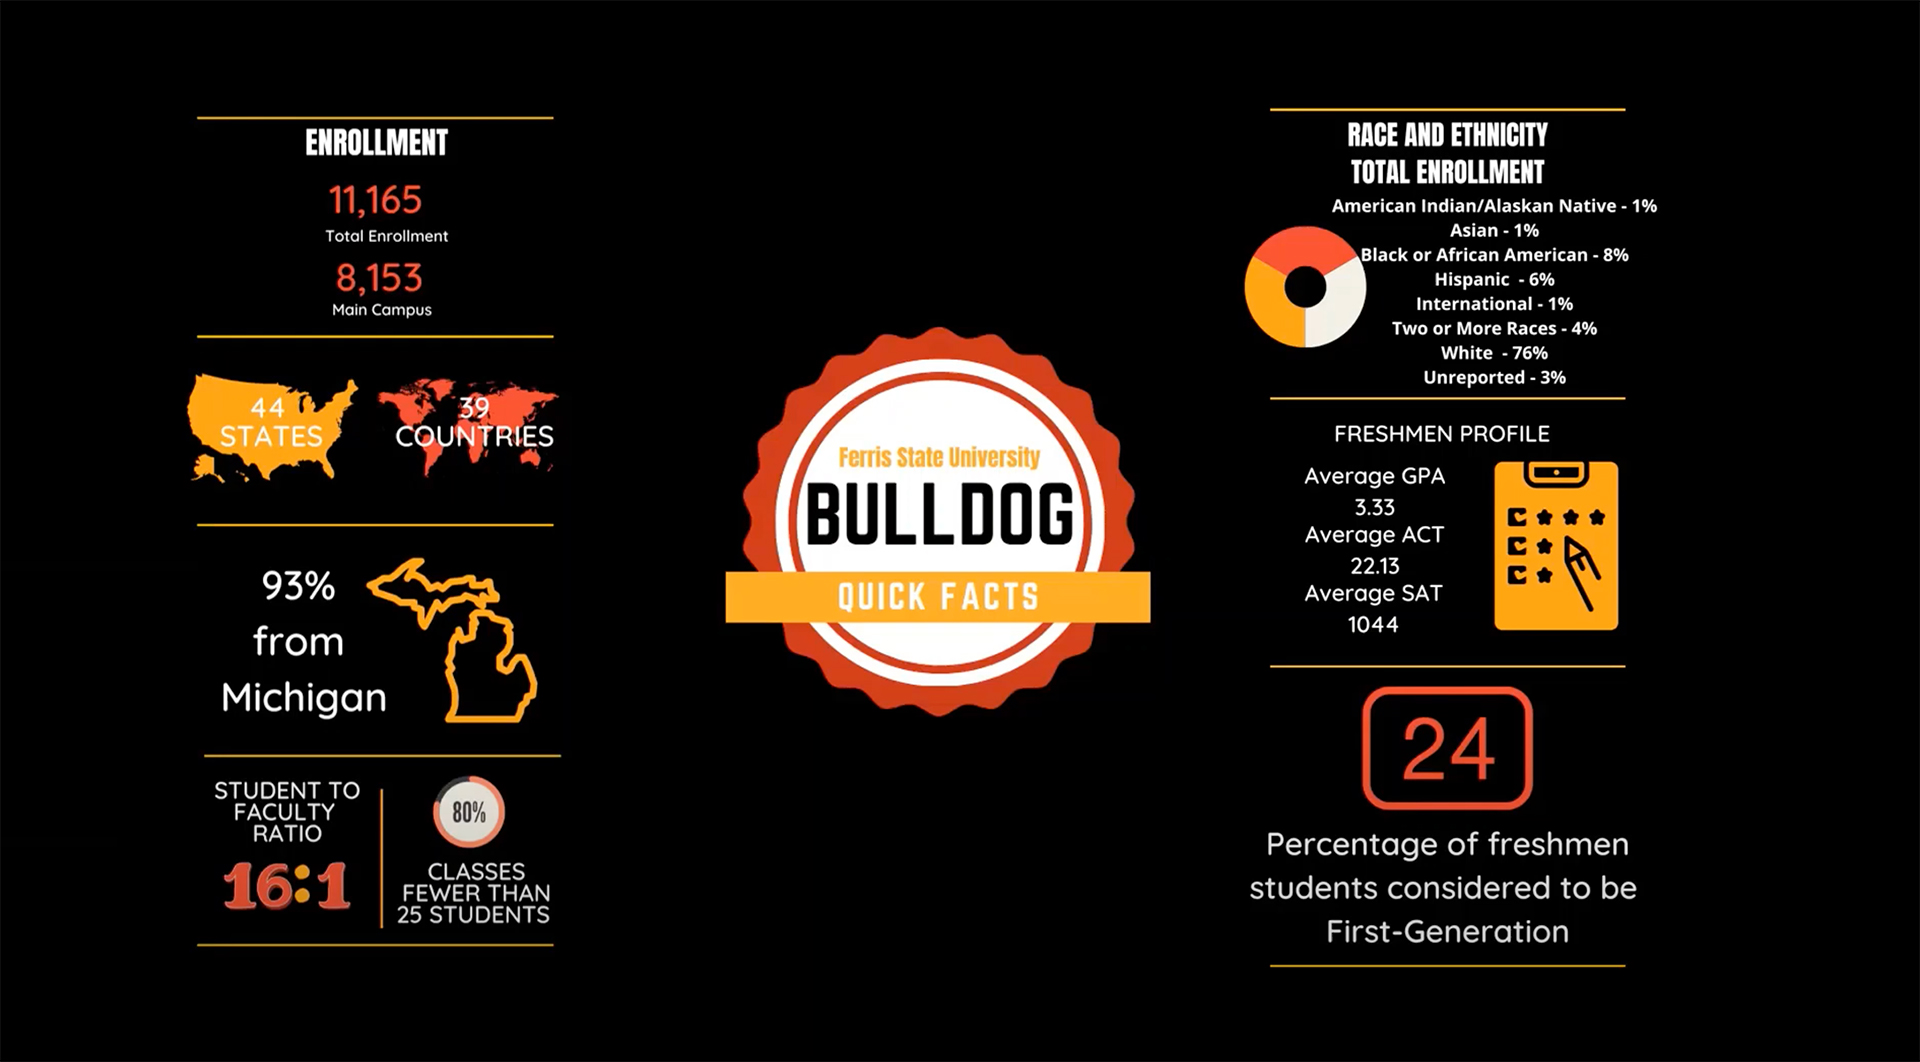 Bulldog Quick Facts